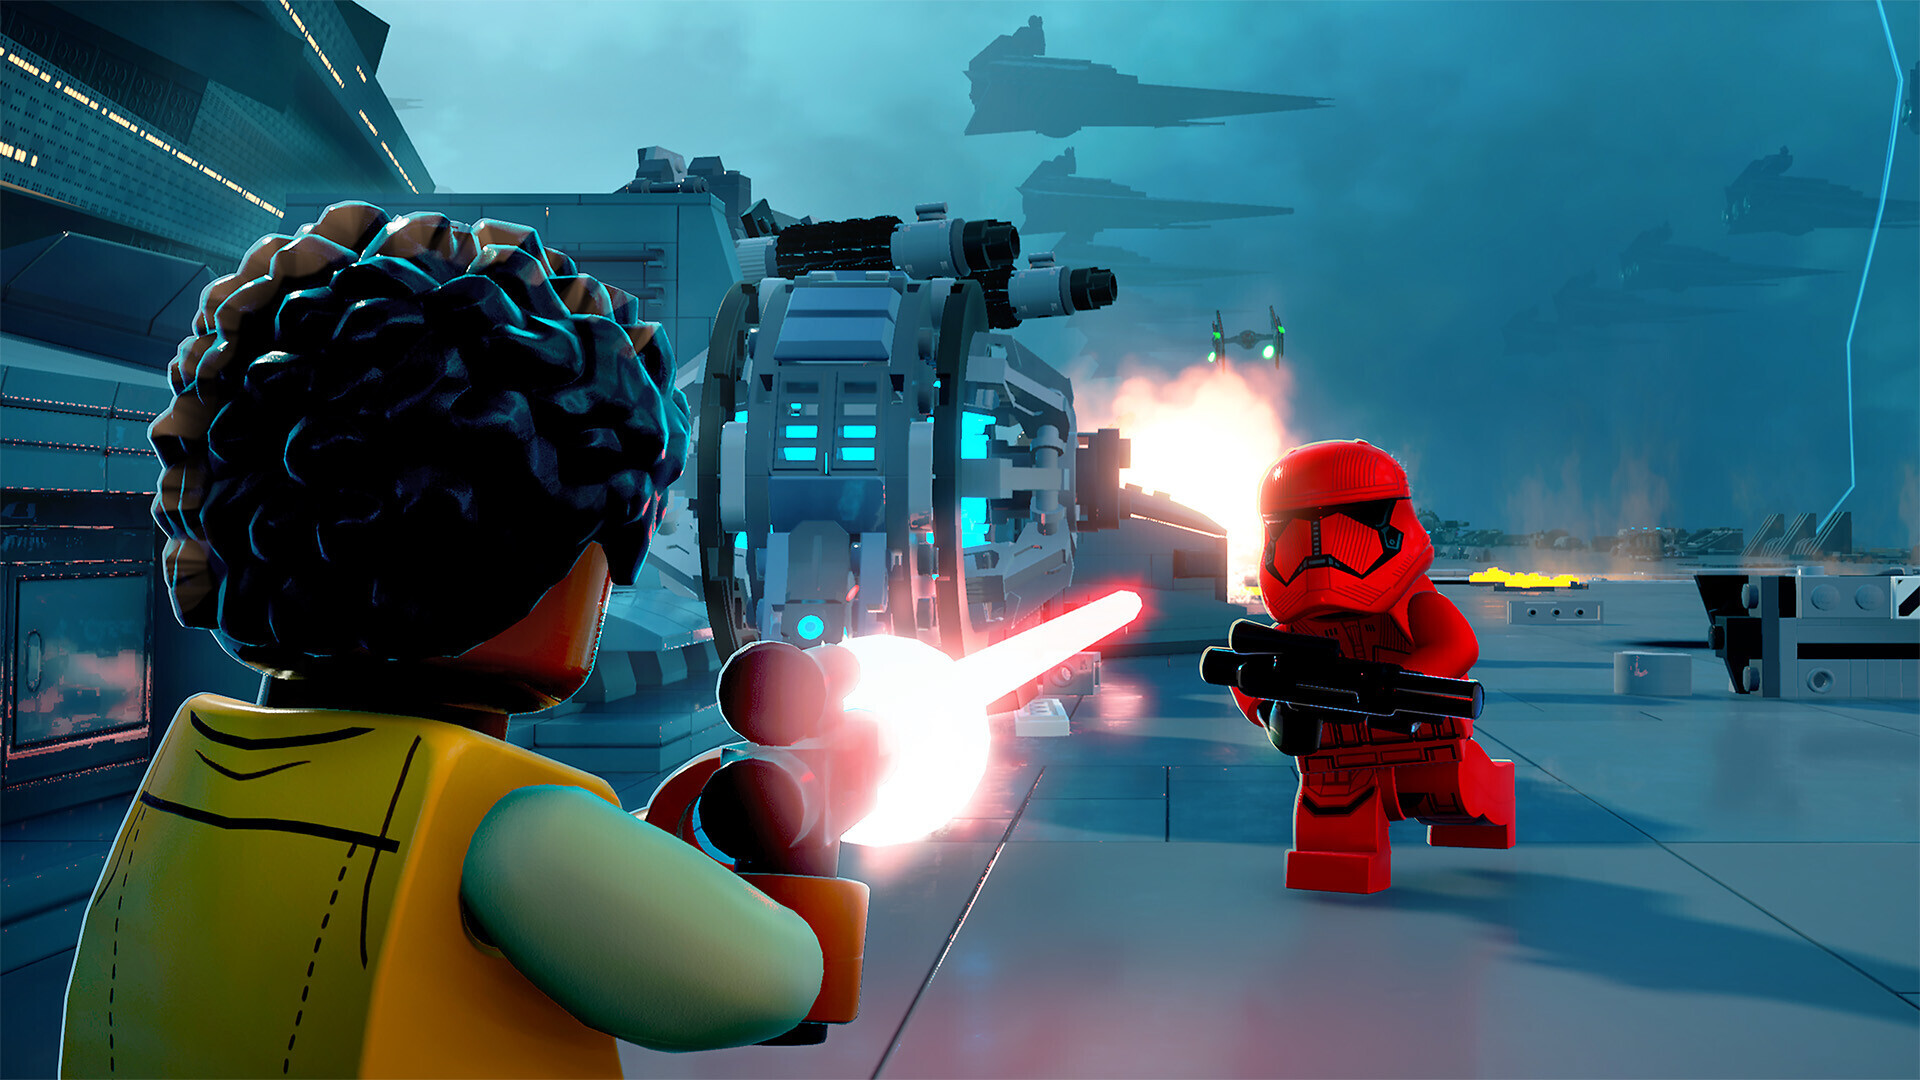 LEGO Star Wars™: The Skywalker Saga - PC - Buy it at Nuuvem